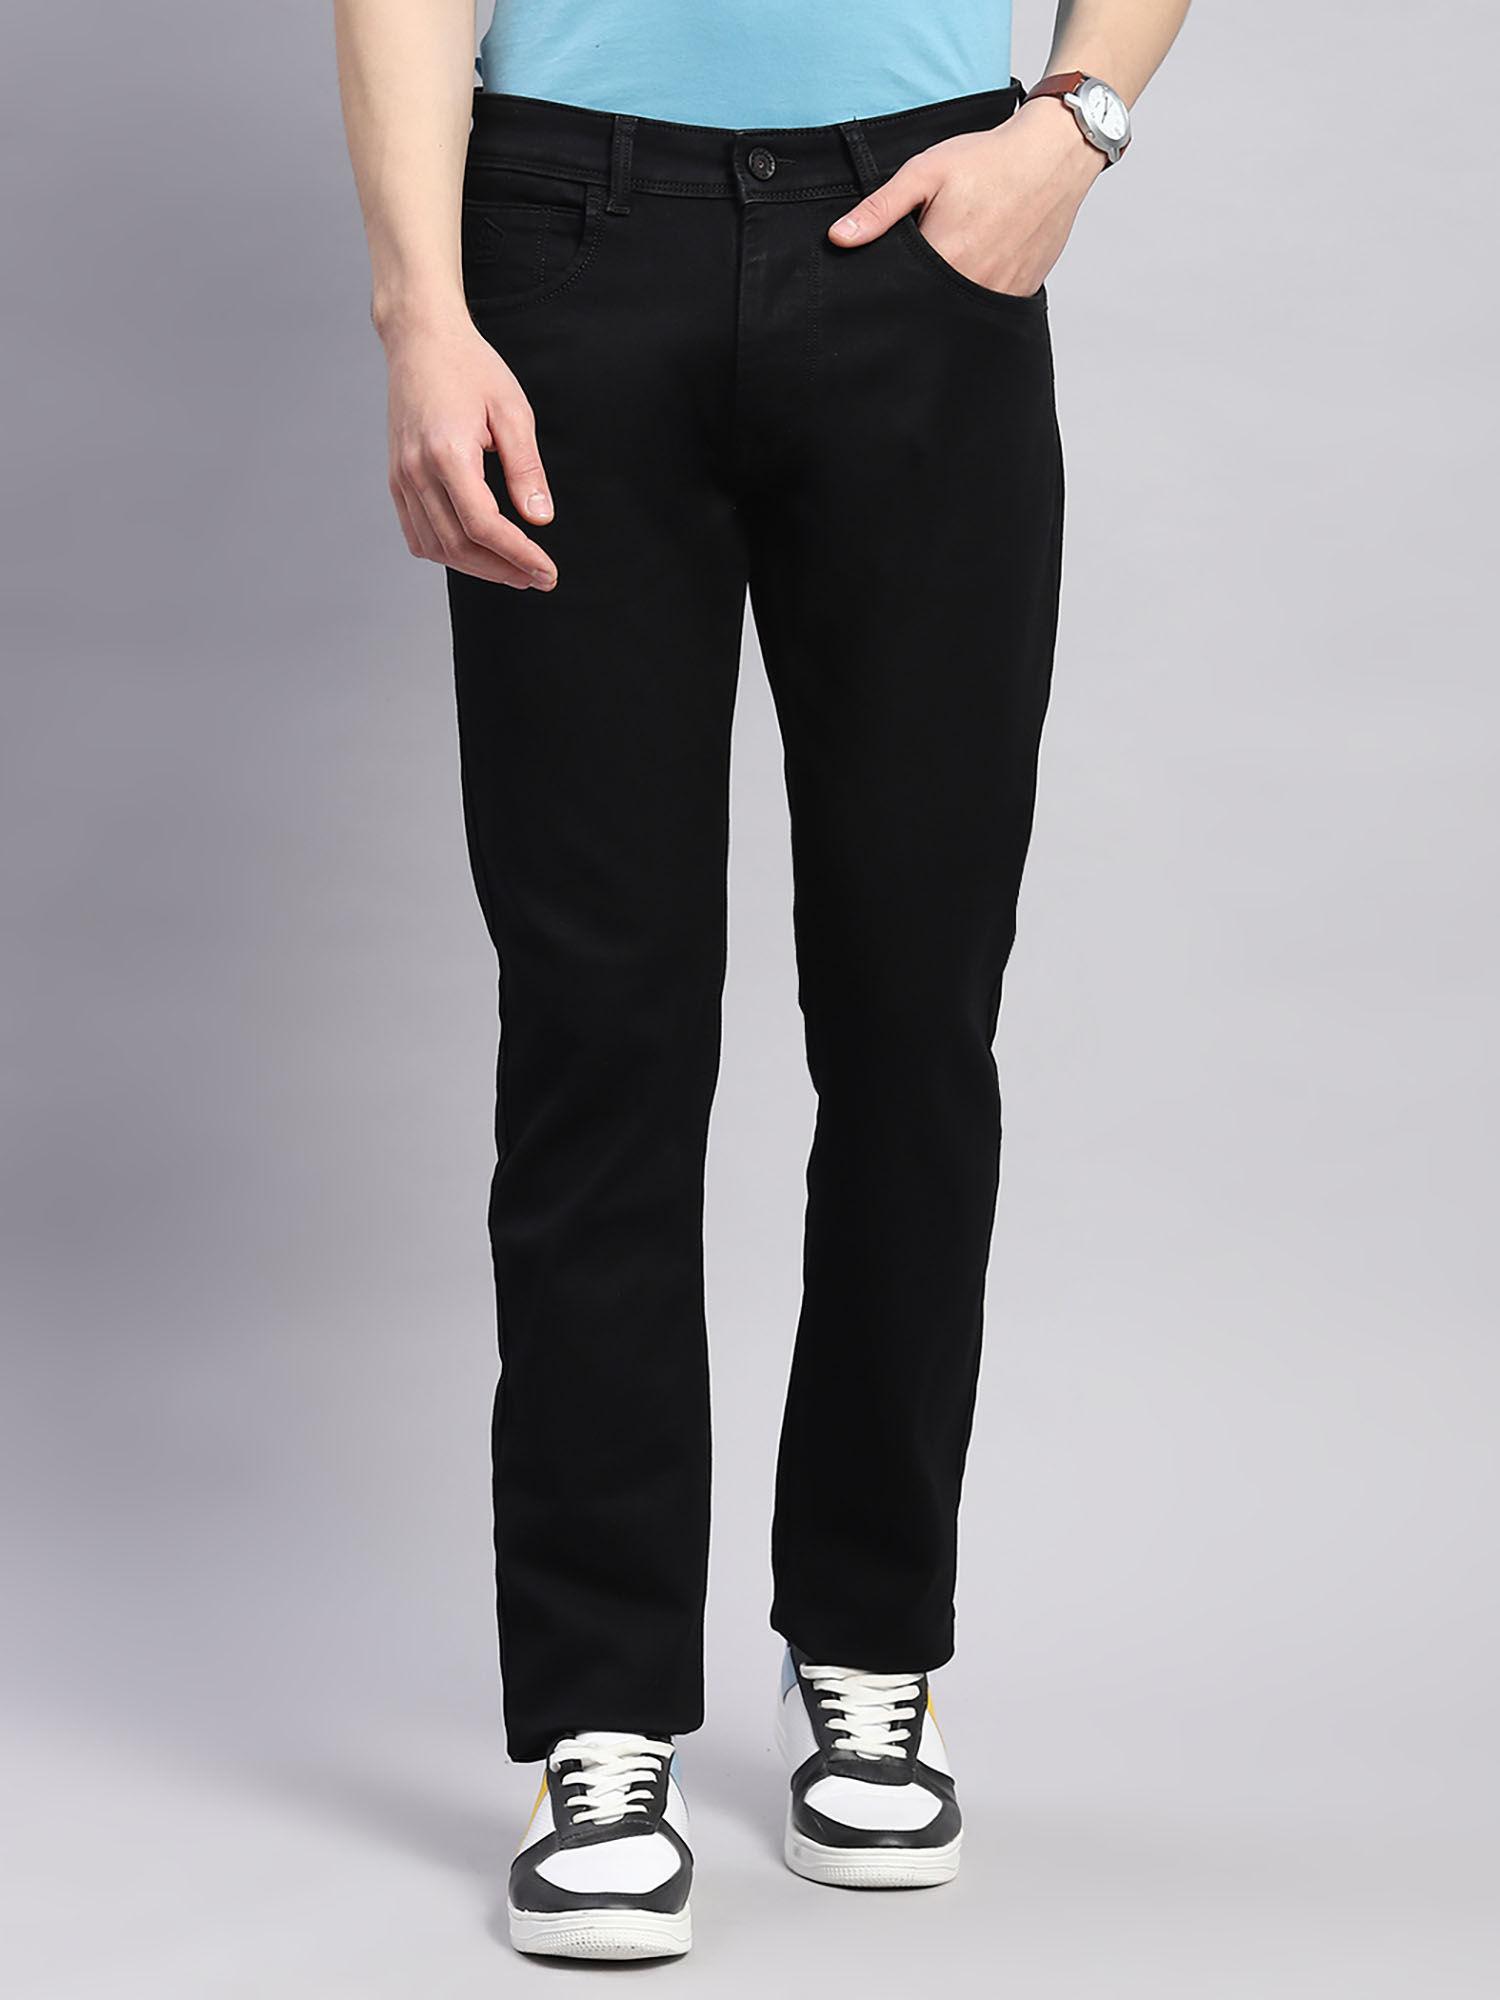 mens-black-light-wash-cotton-blend-straight-fit-casual-jeans